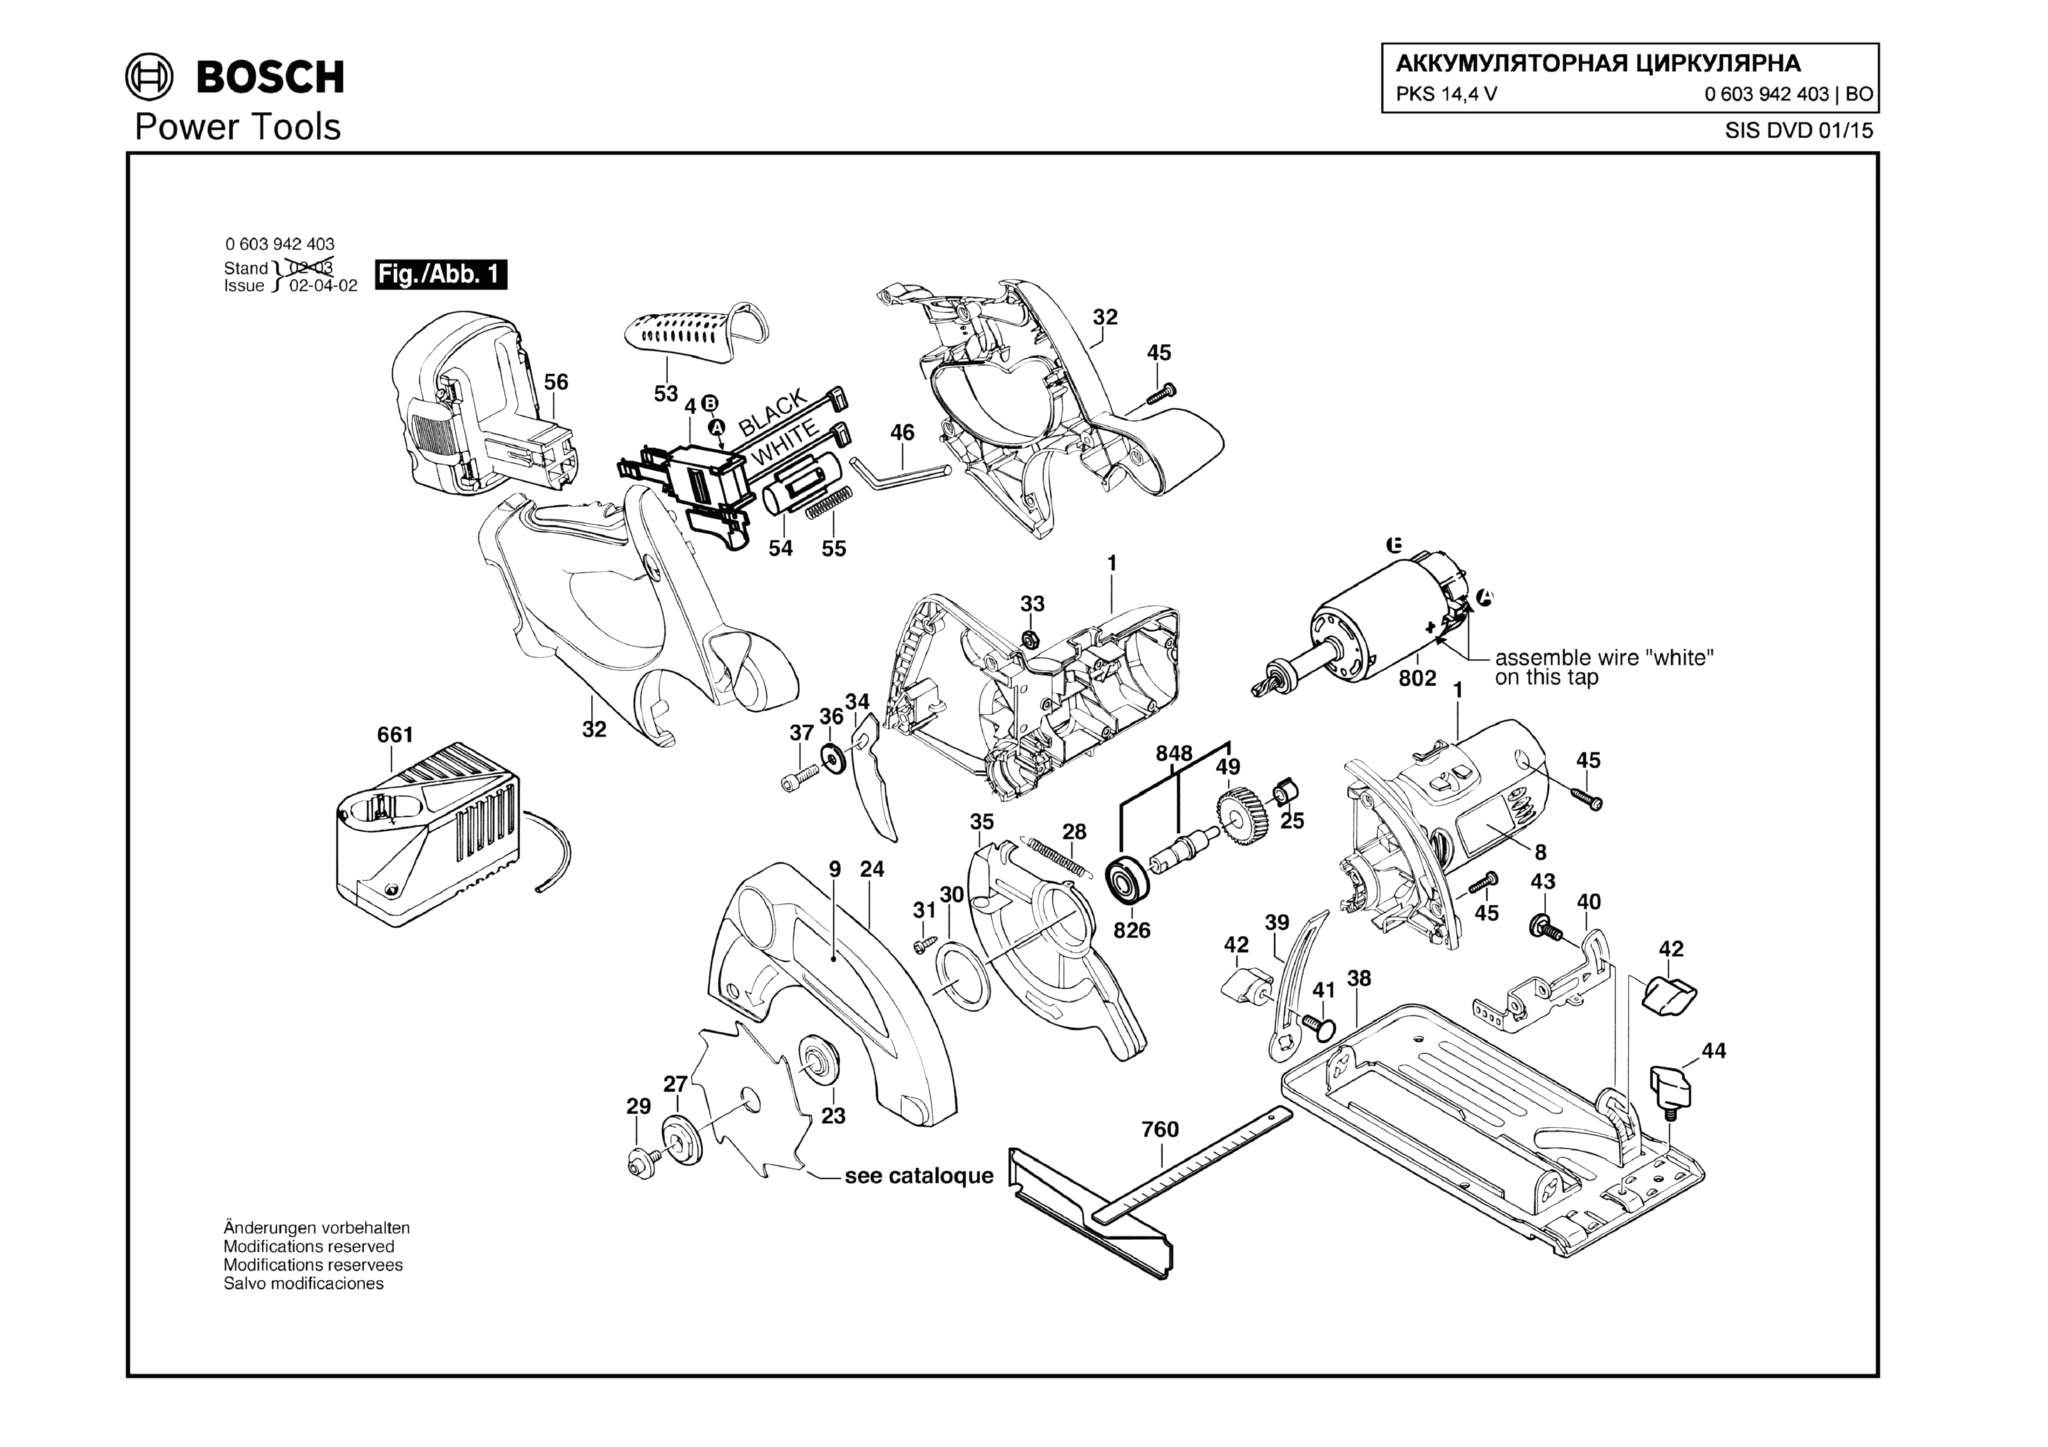 Запчасти, схема и деталировка Bosch PKS 14,4 V (ТИП 0603942403)